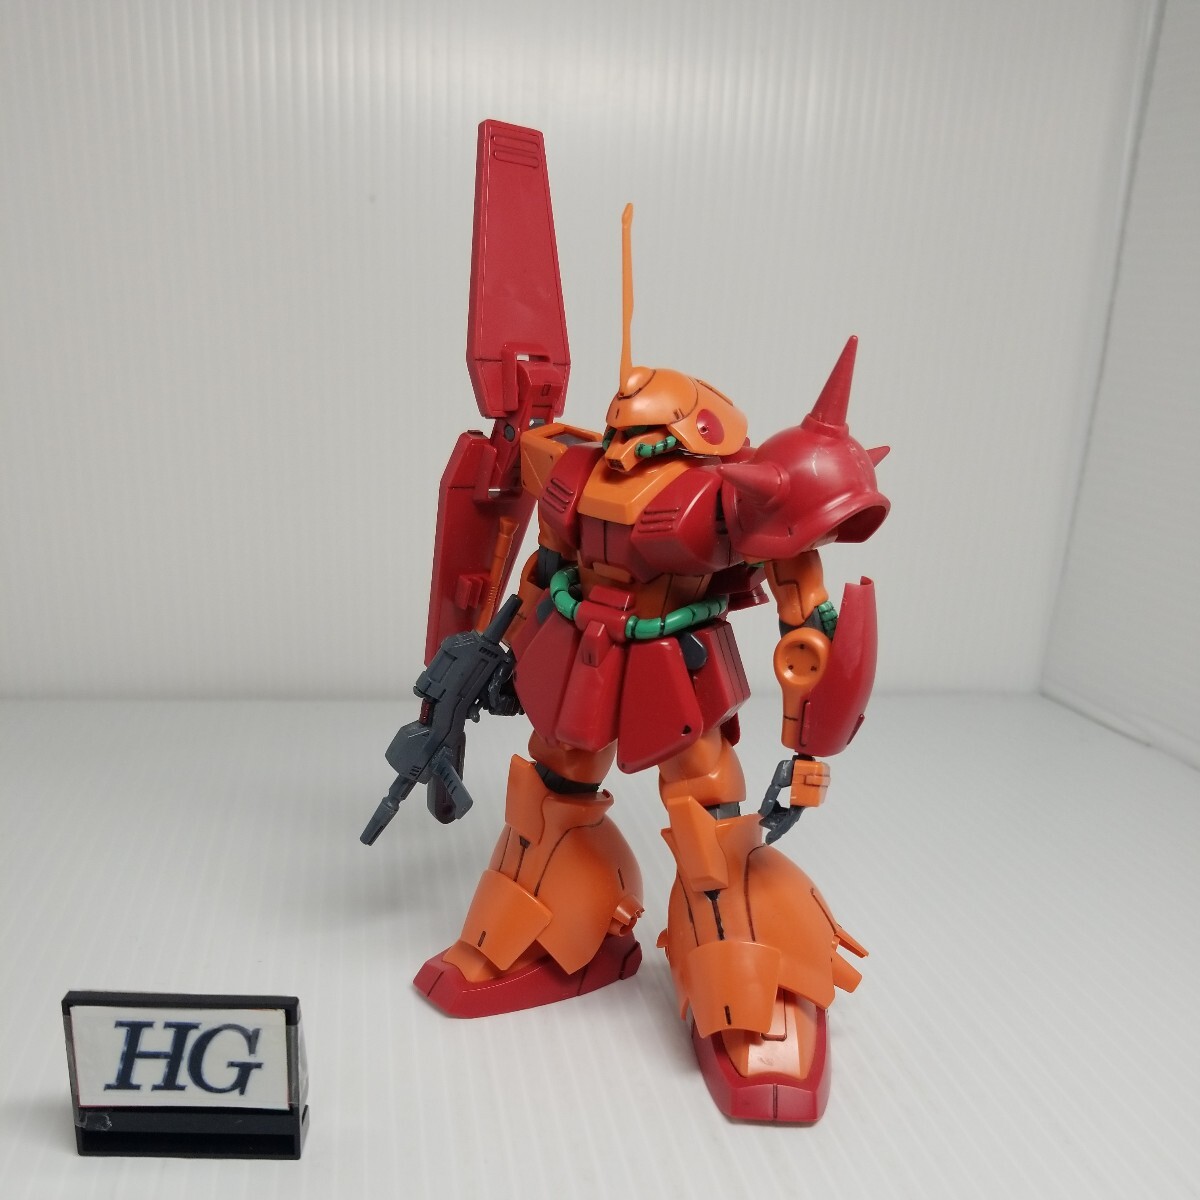 oka-90g 5/17 HGmala носорог Gundam включение в покупку возможно gun pra Junk 